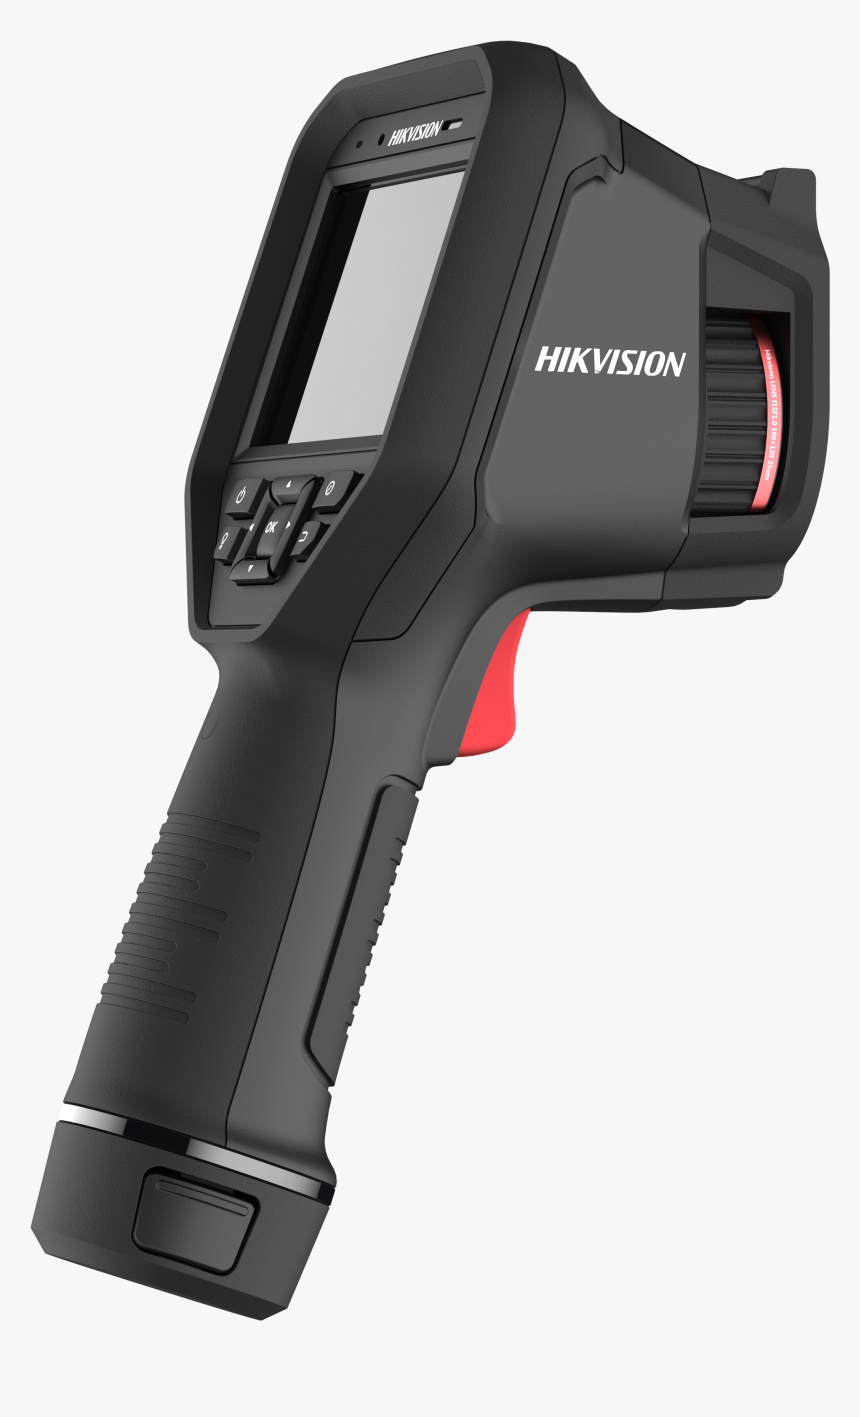 Hikvision Handheld Thermal Camera, HD Png Download, Free Download